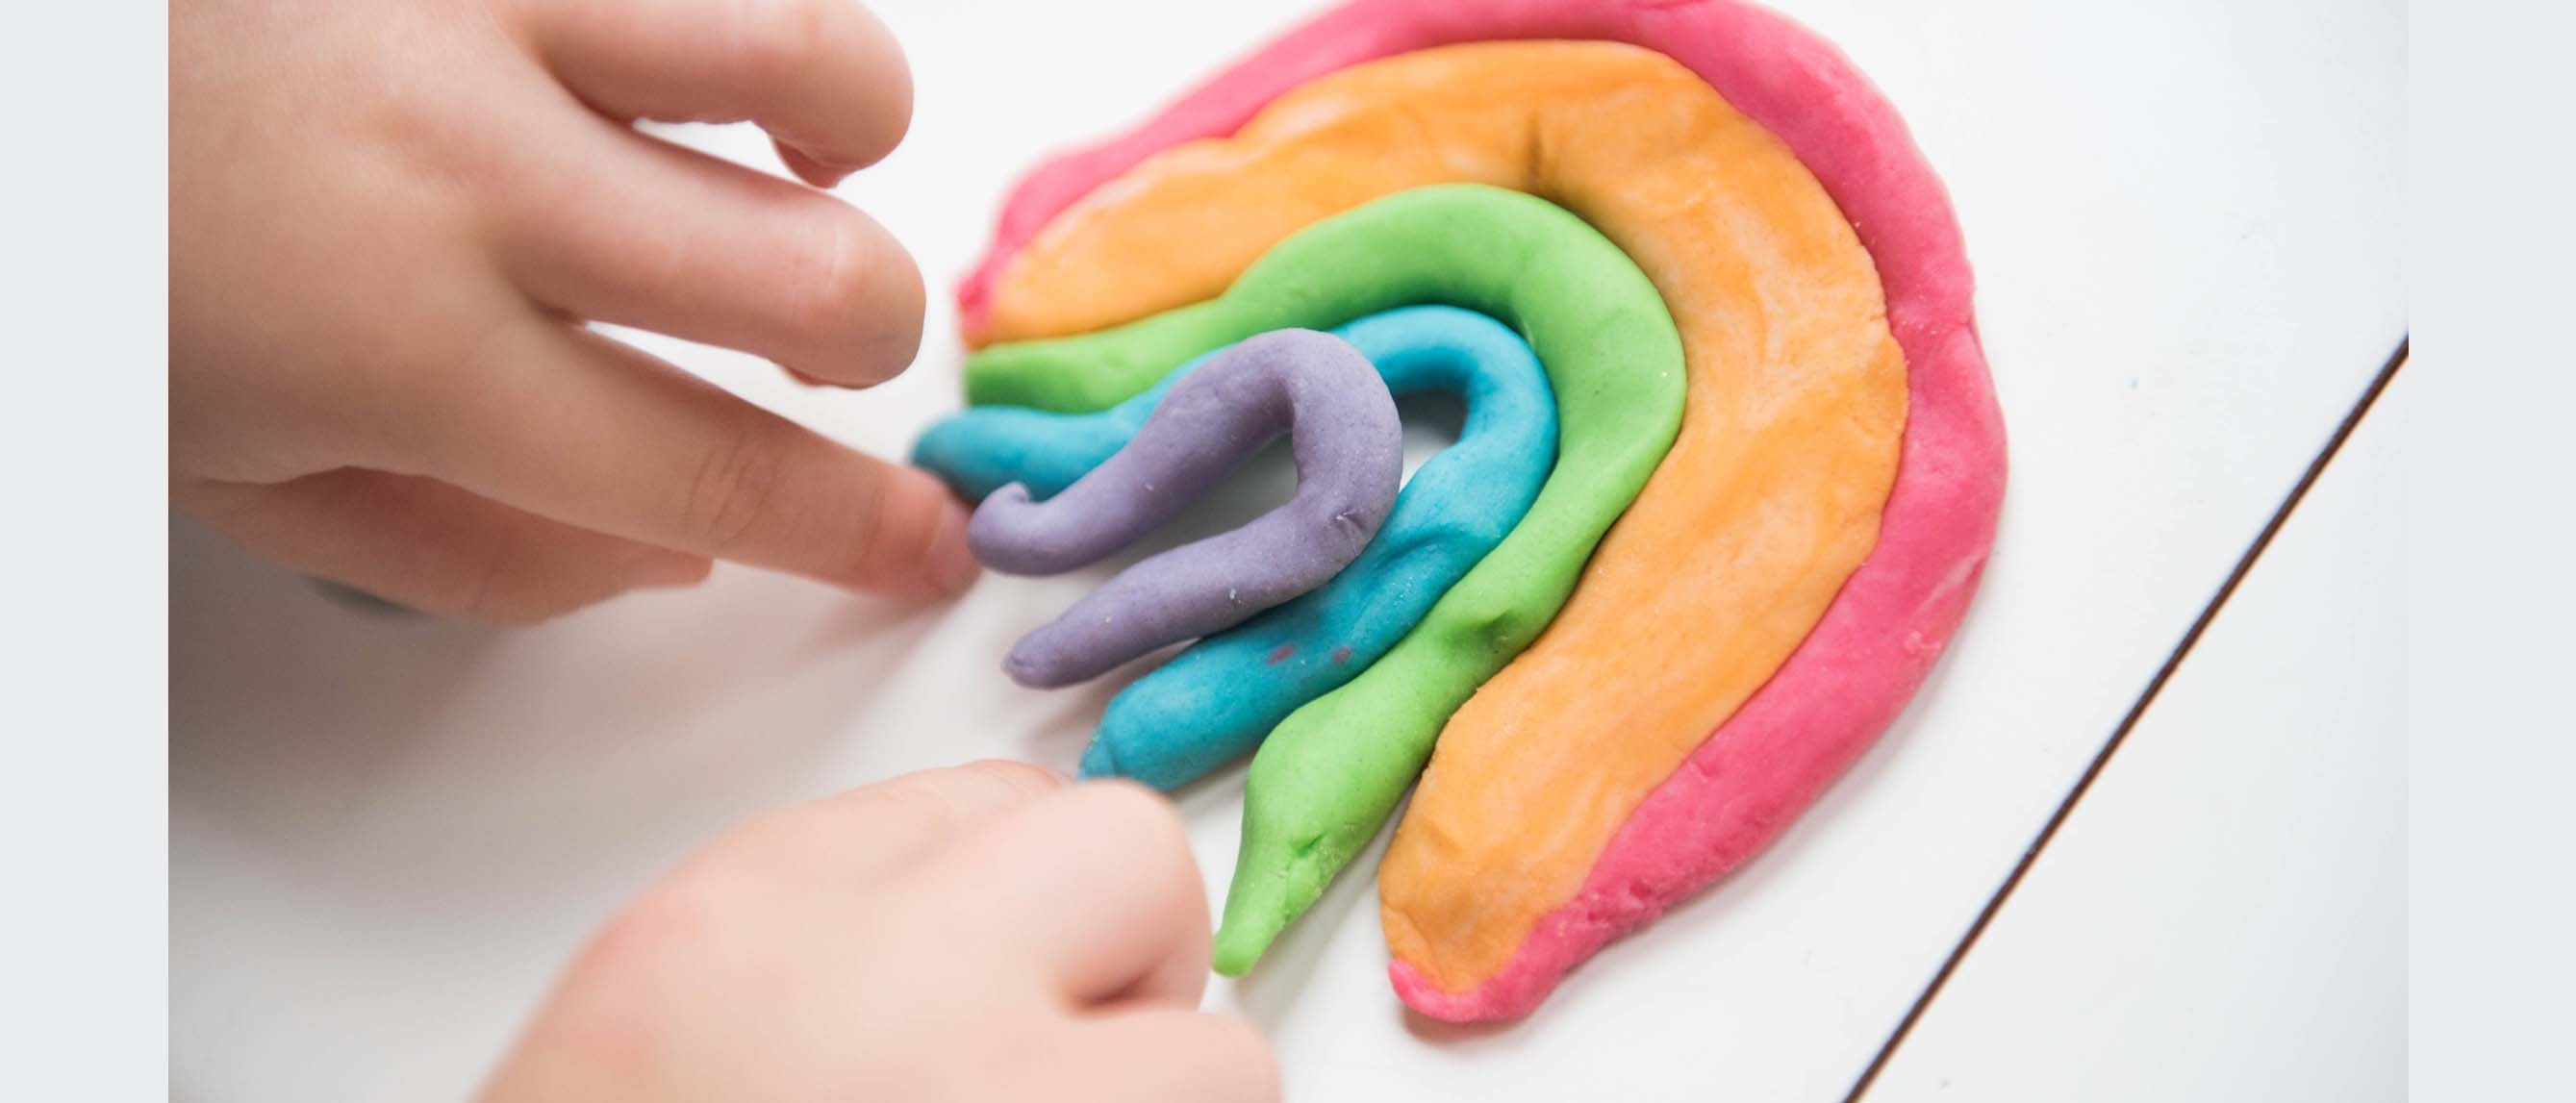 How to make playdough for craft time